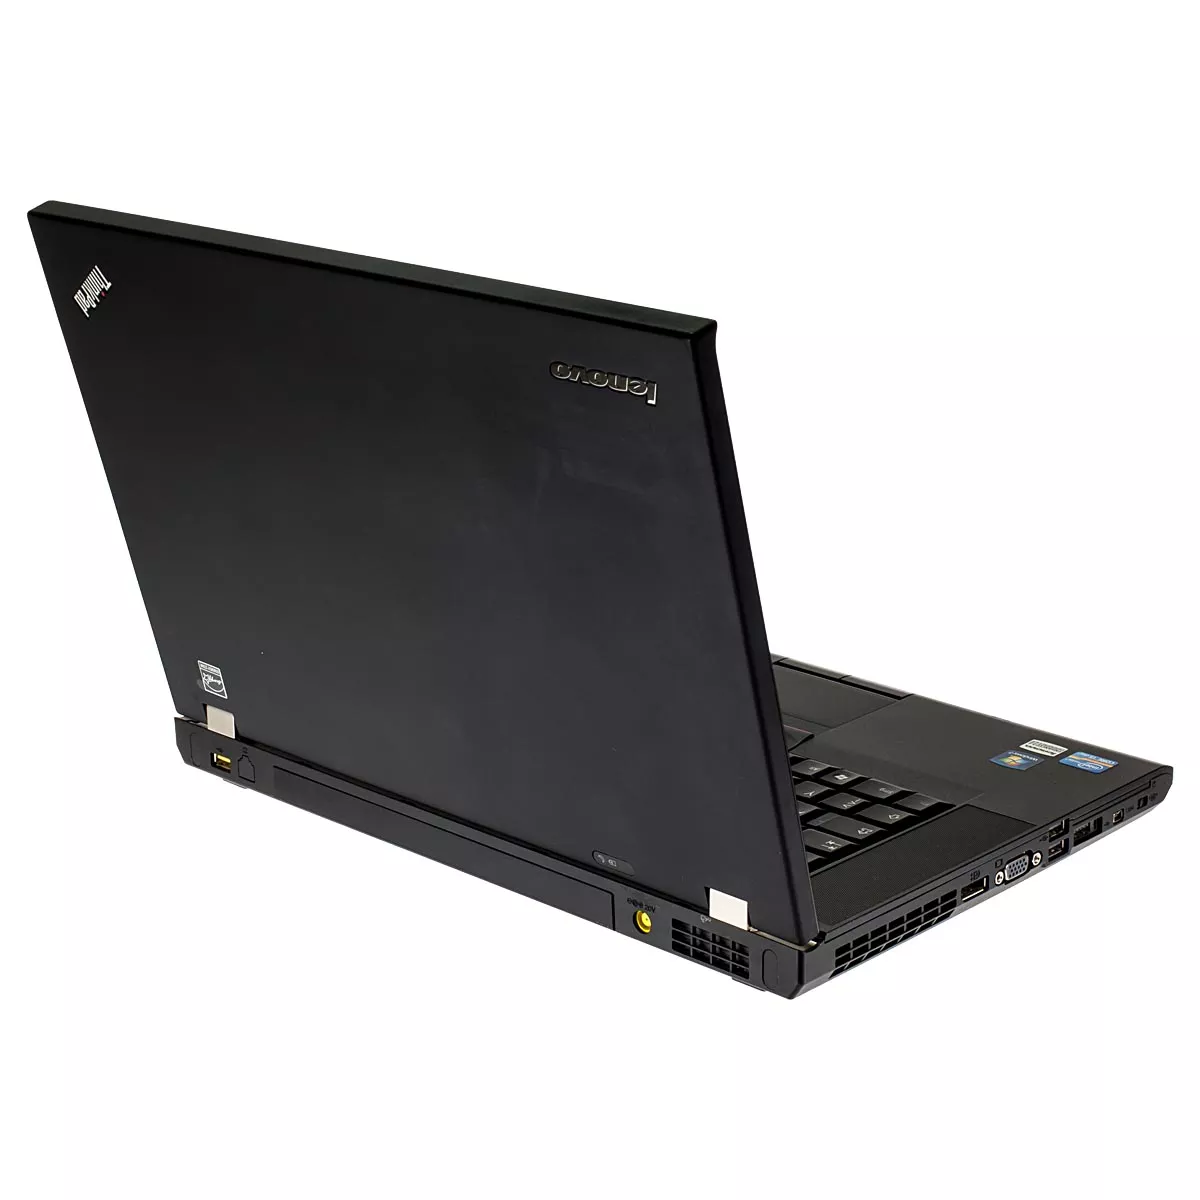 Lenovo ThinkPad W510 Quad Core i7 720Q 1,60 GHz Webcam